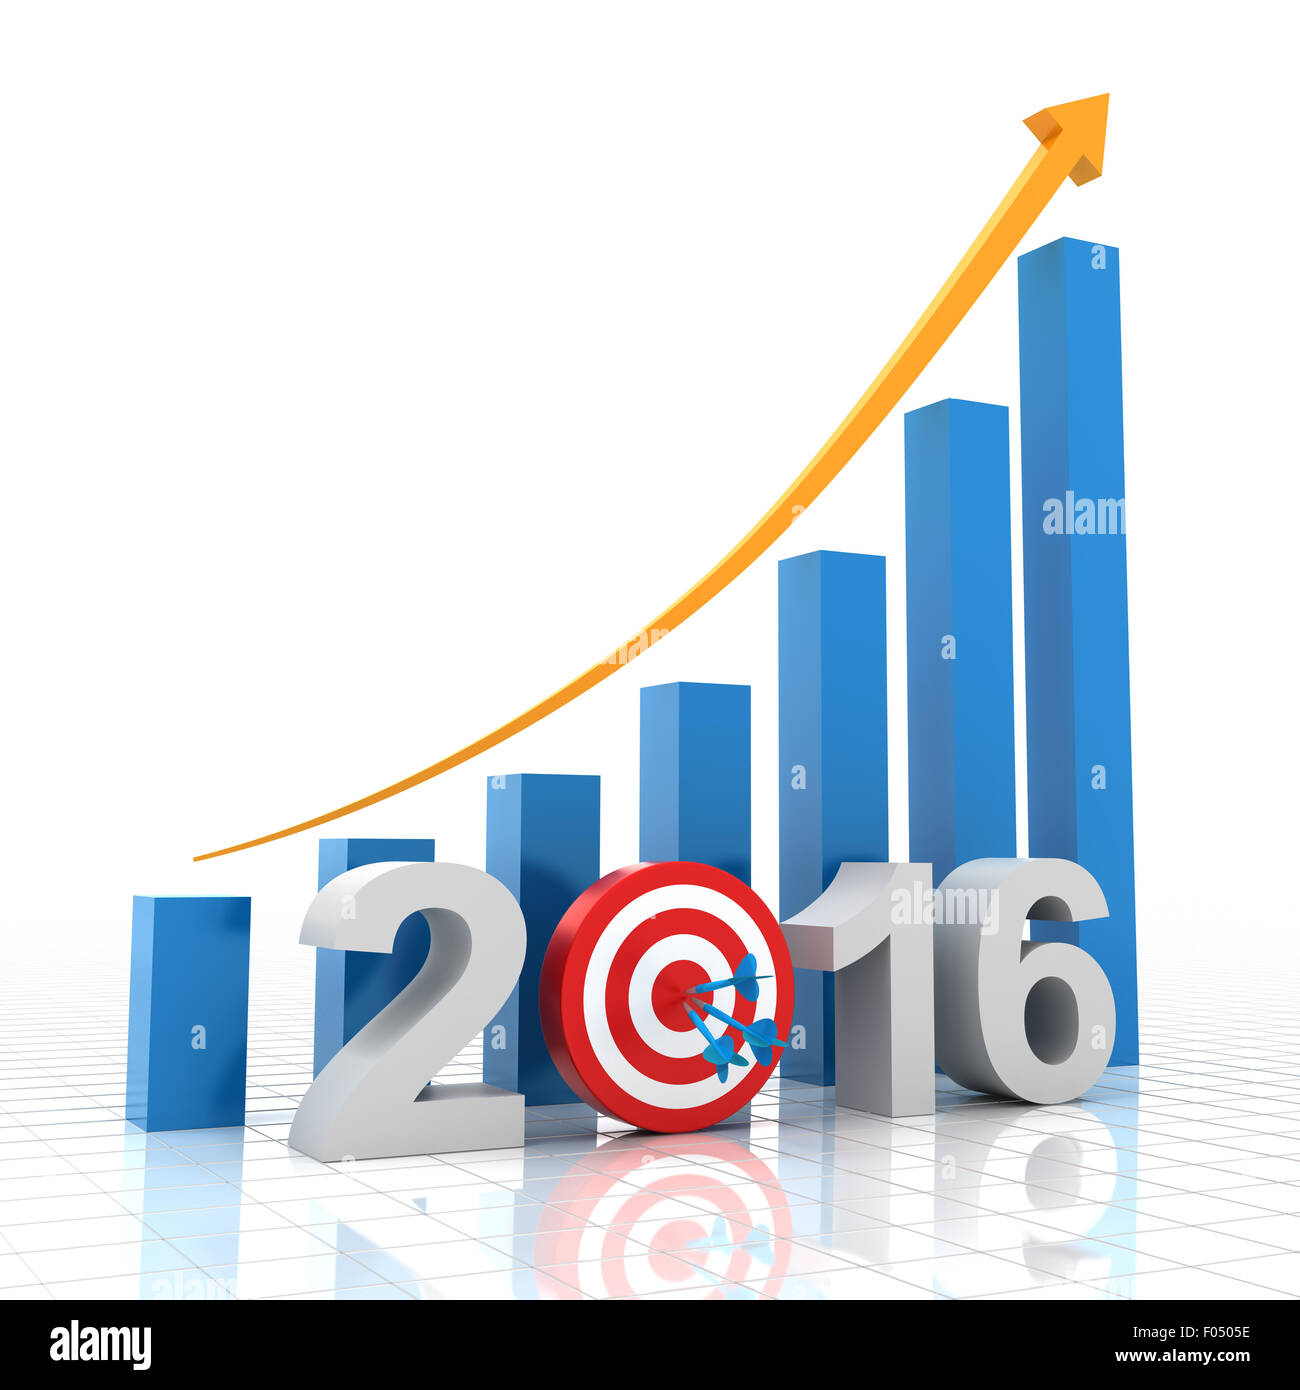 Growth target 2016 Stock Photo